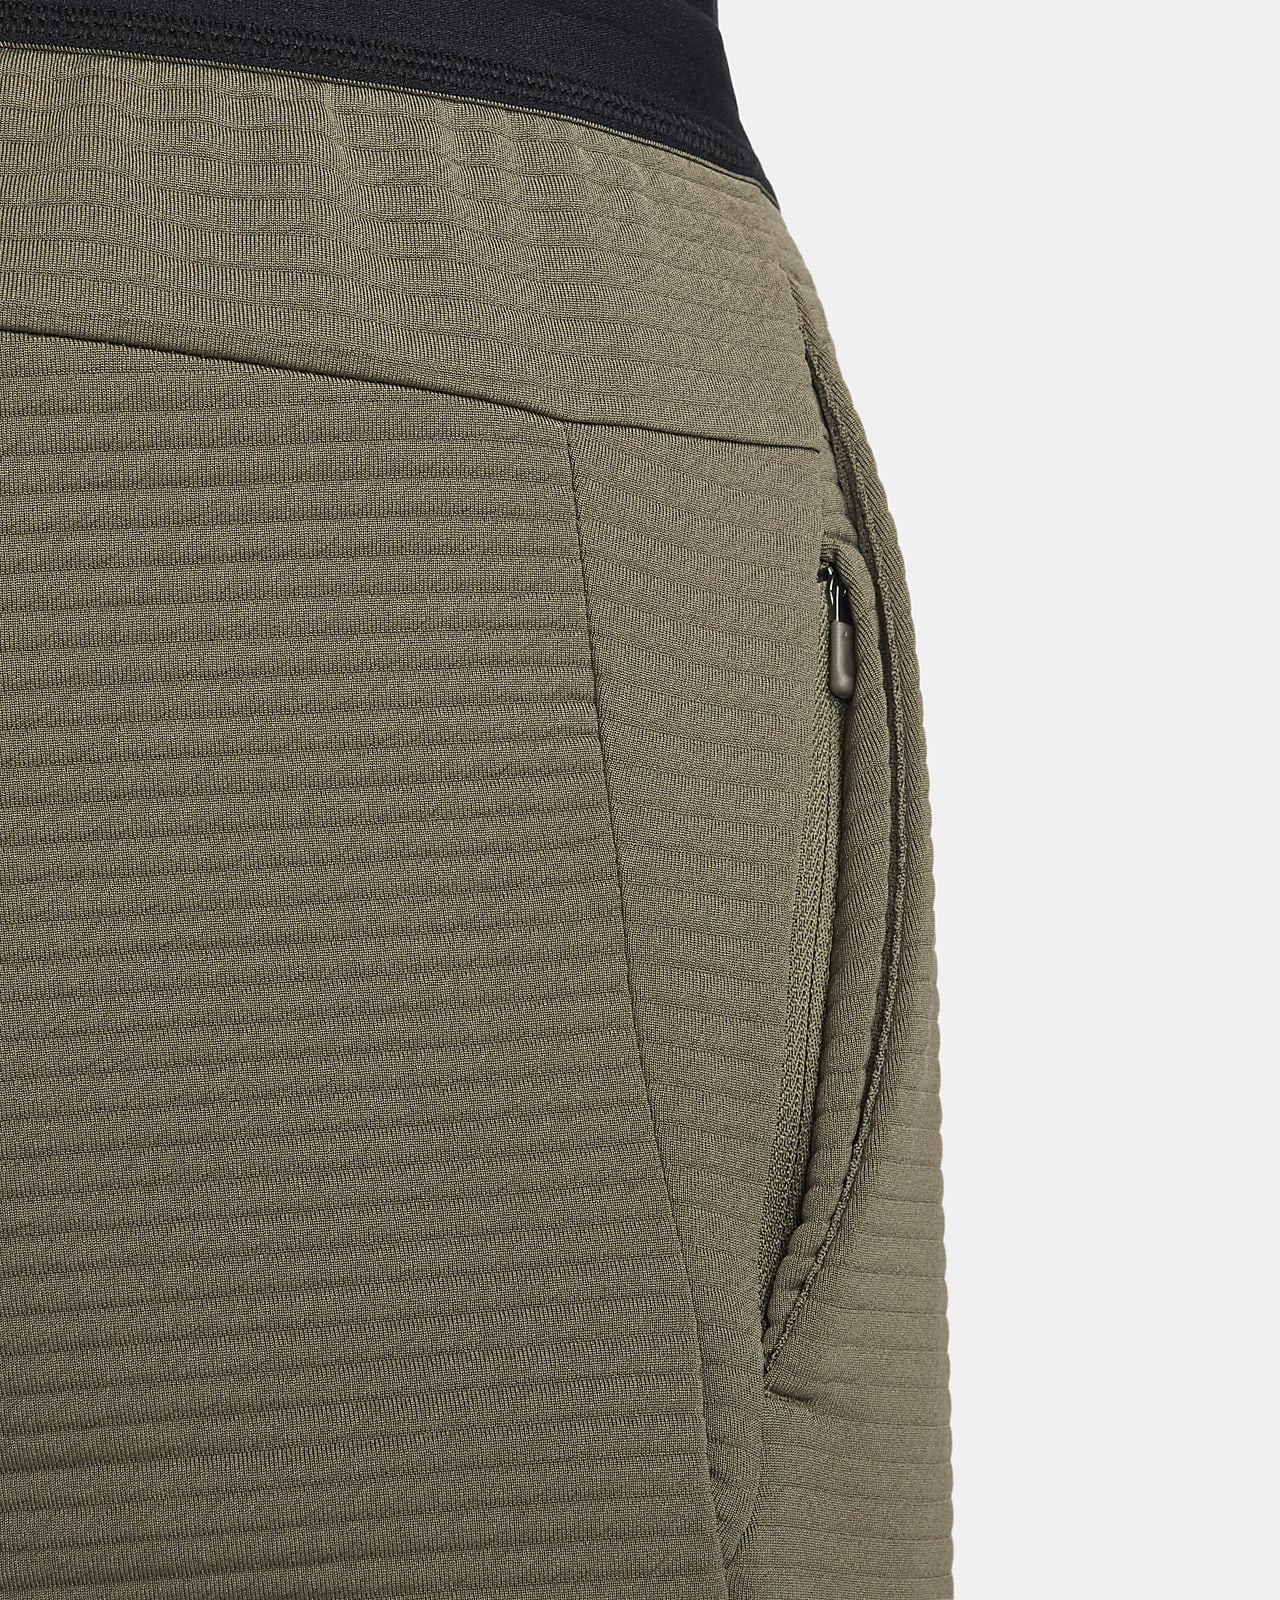 Nike Yoga Dri FIT Mens Comfort Fleece Pants Mica Green NEW DQ4882 330 -  SIZE XL